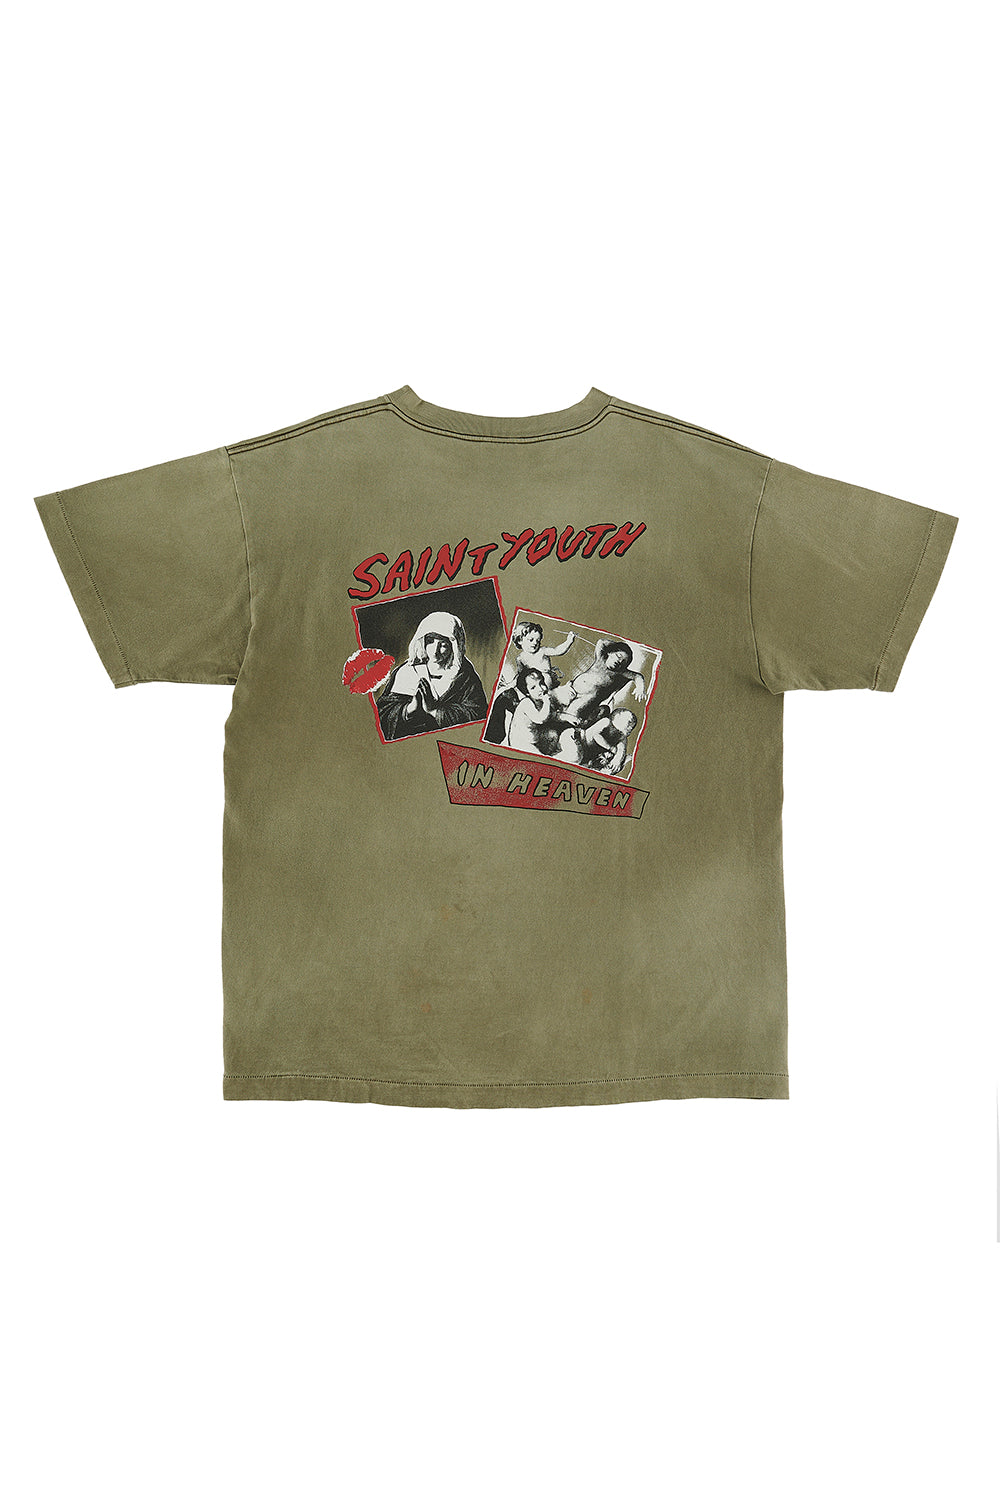 SM-S22-0000-024 | IN HEAVEN ショートスリーブTシャツ | SAINT 